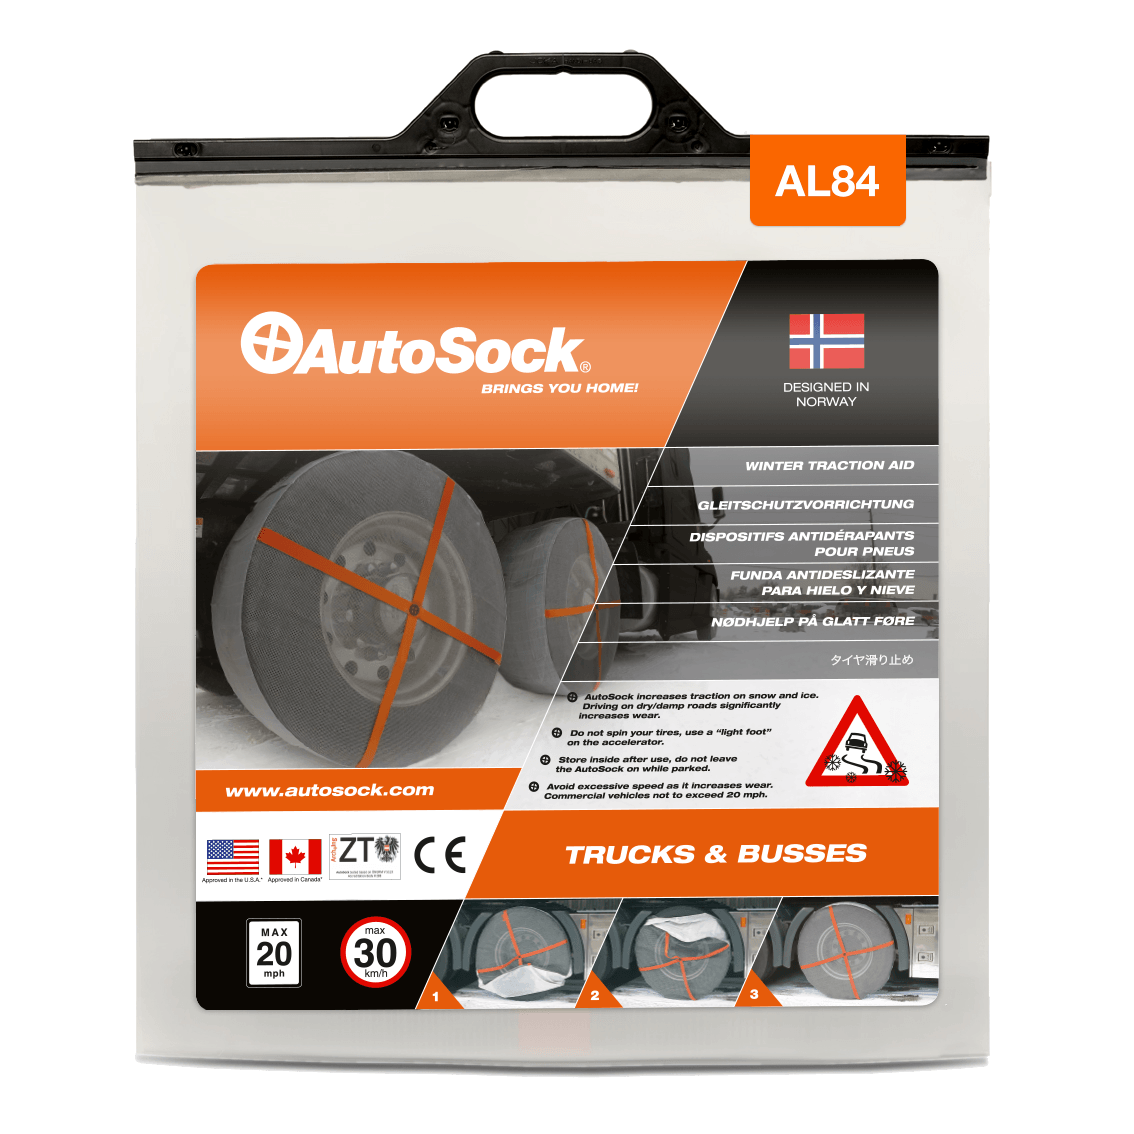 Embalaje del producto AutoSock AL 84 AL84 para camiones (vista frontal)